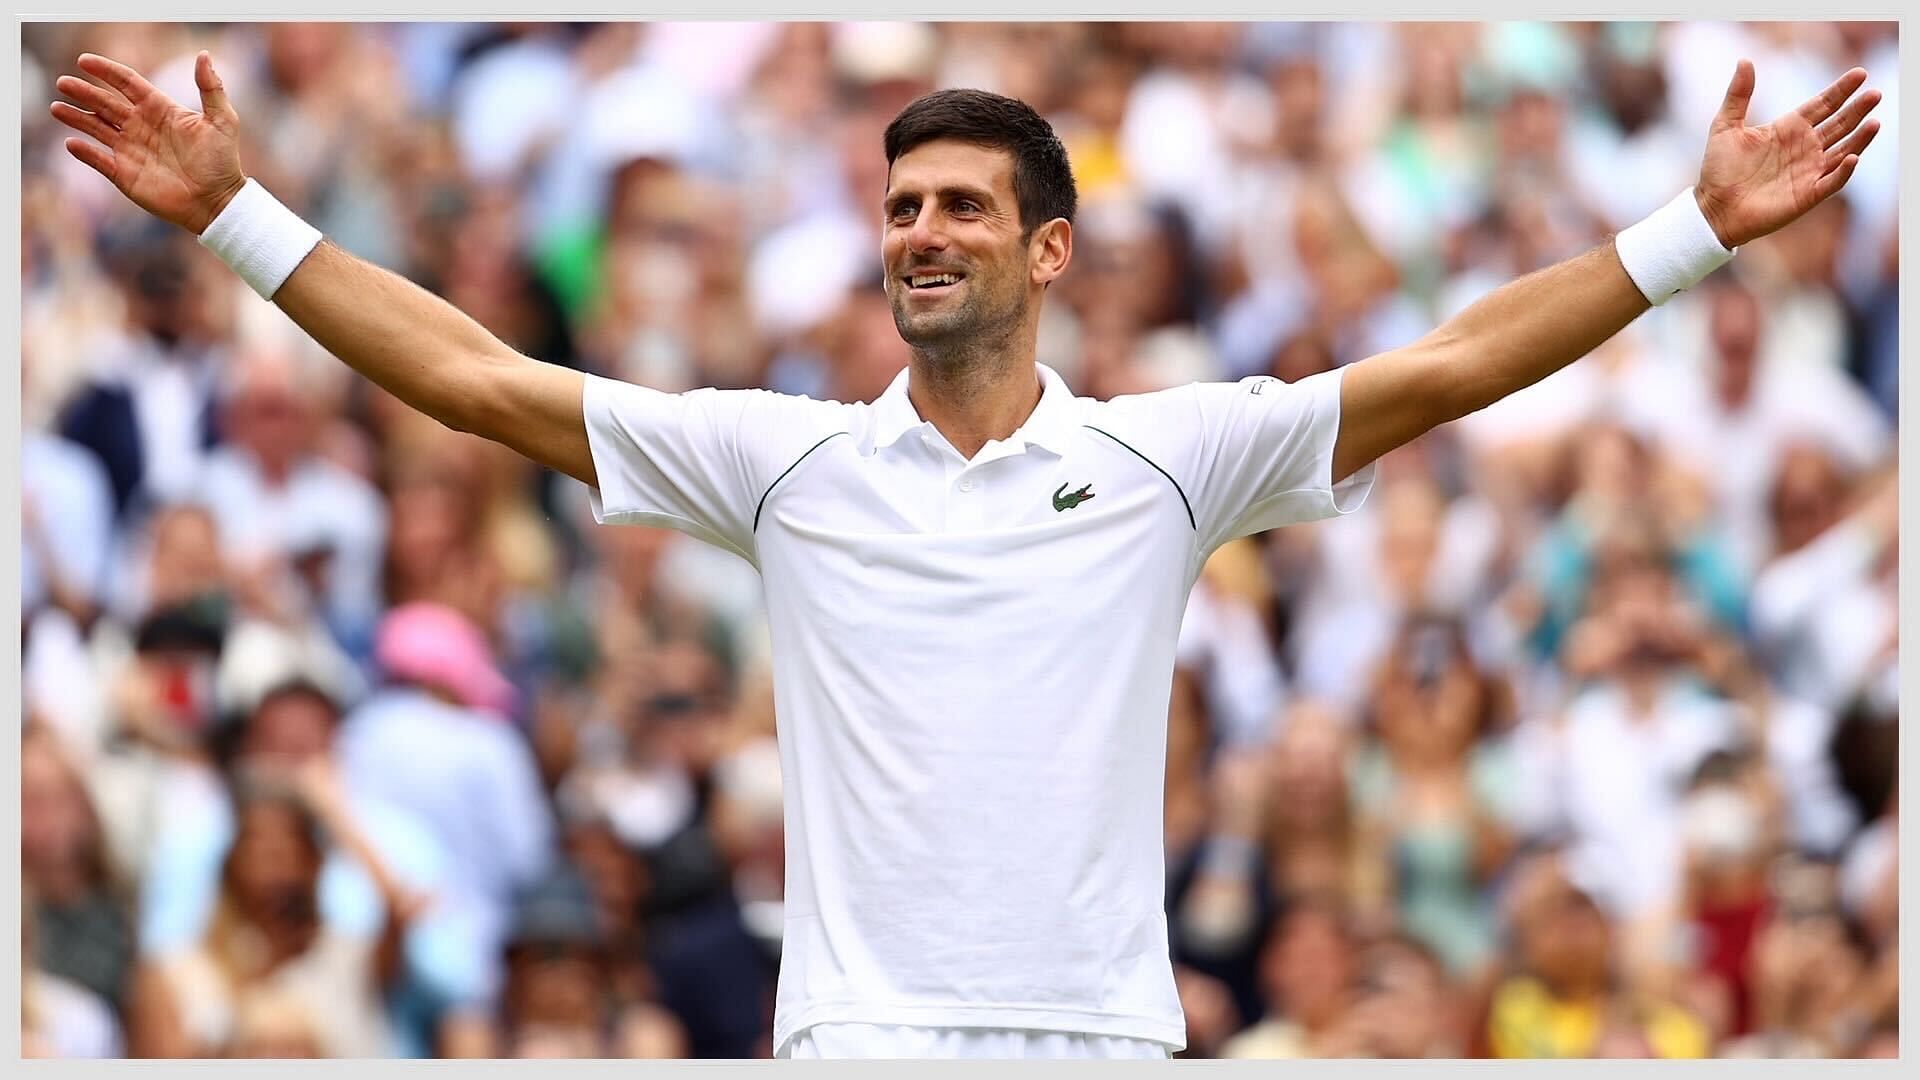 Djokovic won his 23rd Grand Slam singles title